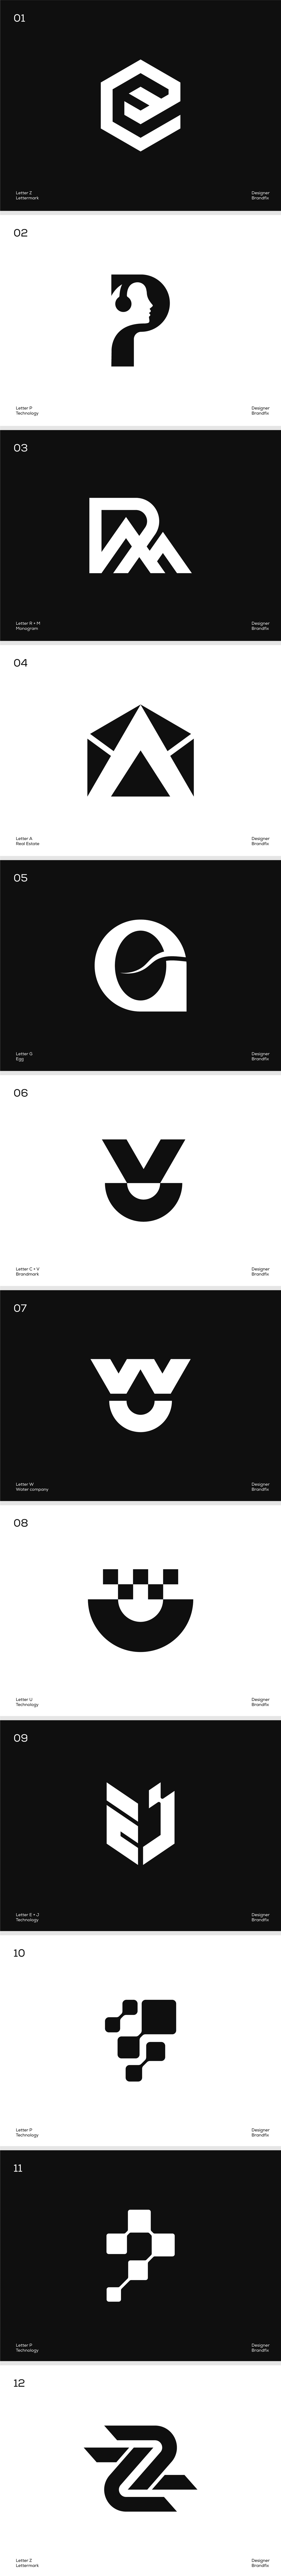 logo collection logofolio Logo Design brand identity Graphic Designer Logotype logos Modern Logo monogram letter logo design